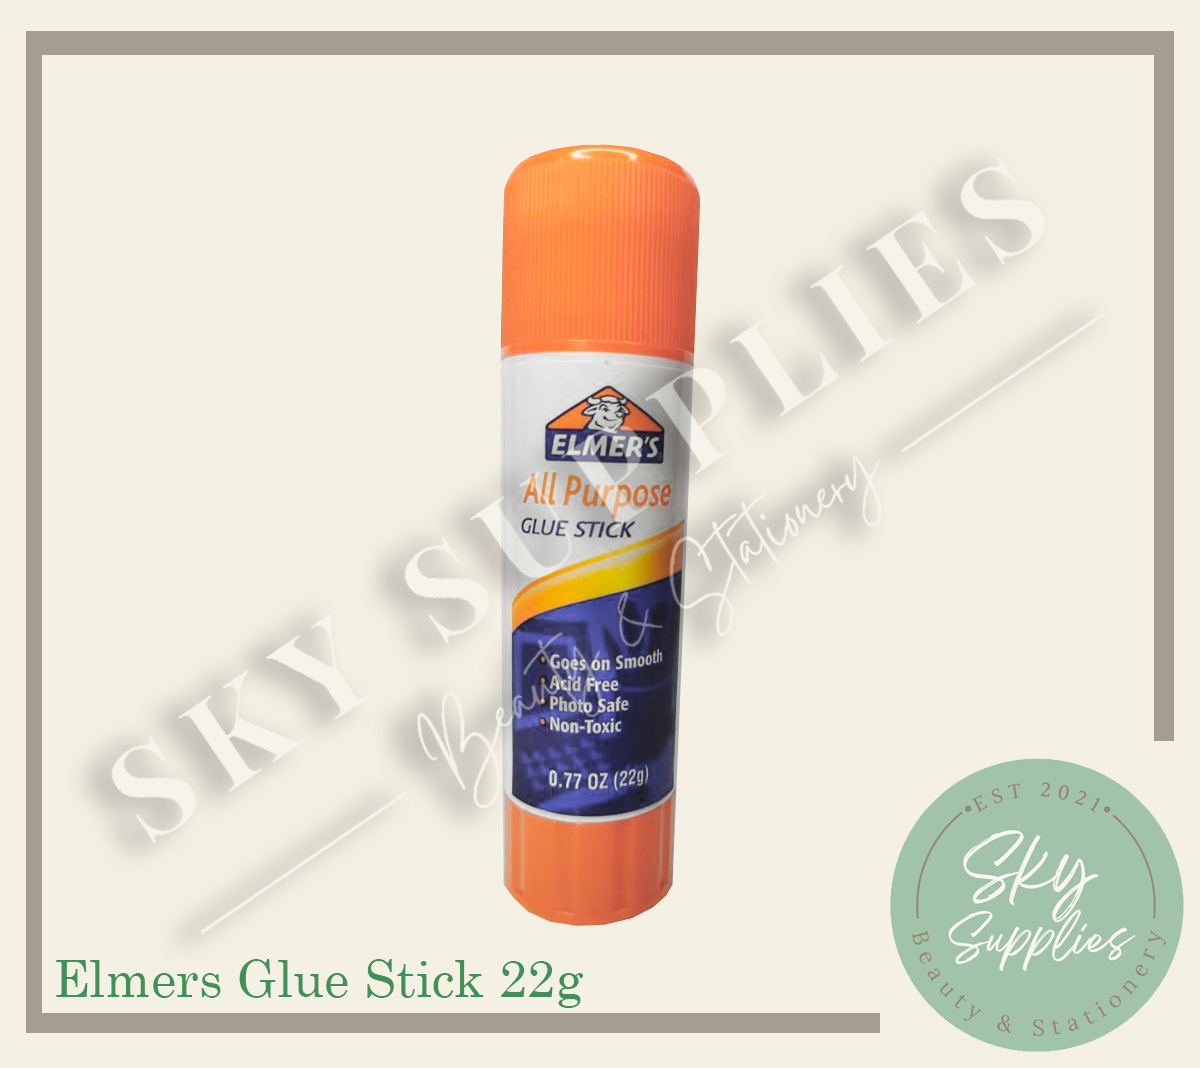 Elmer's All-Purpose Glue Stick 22g